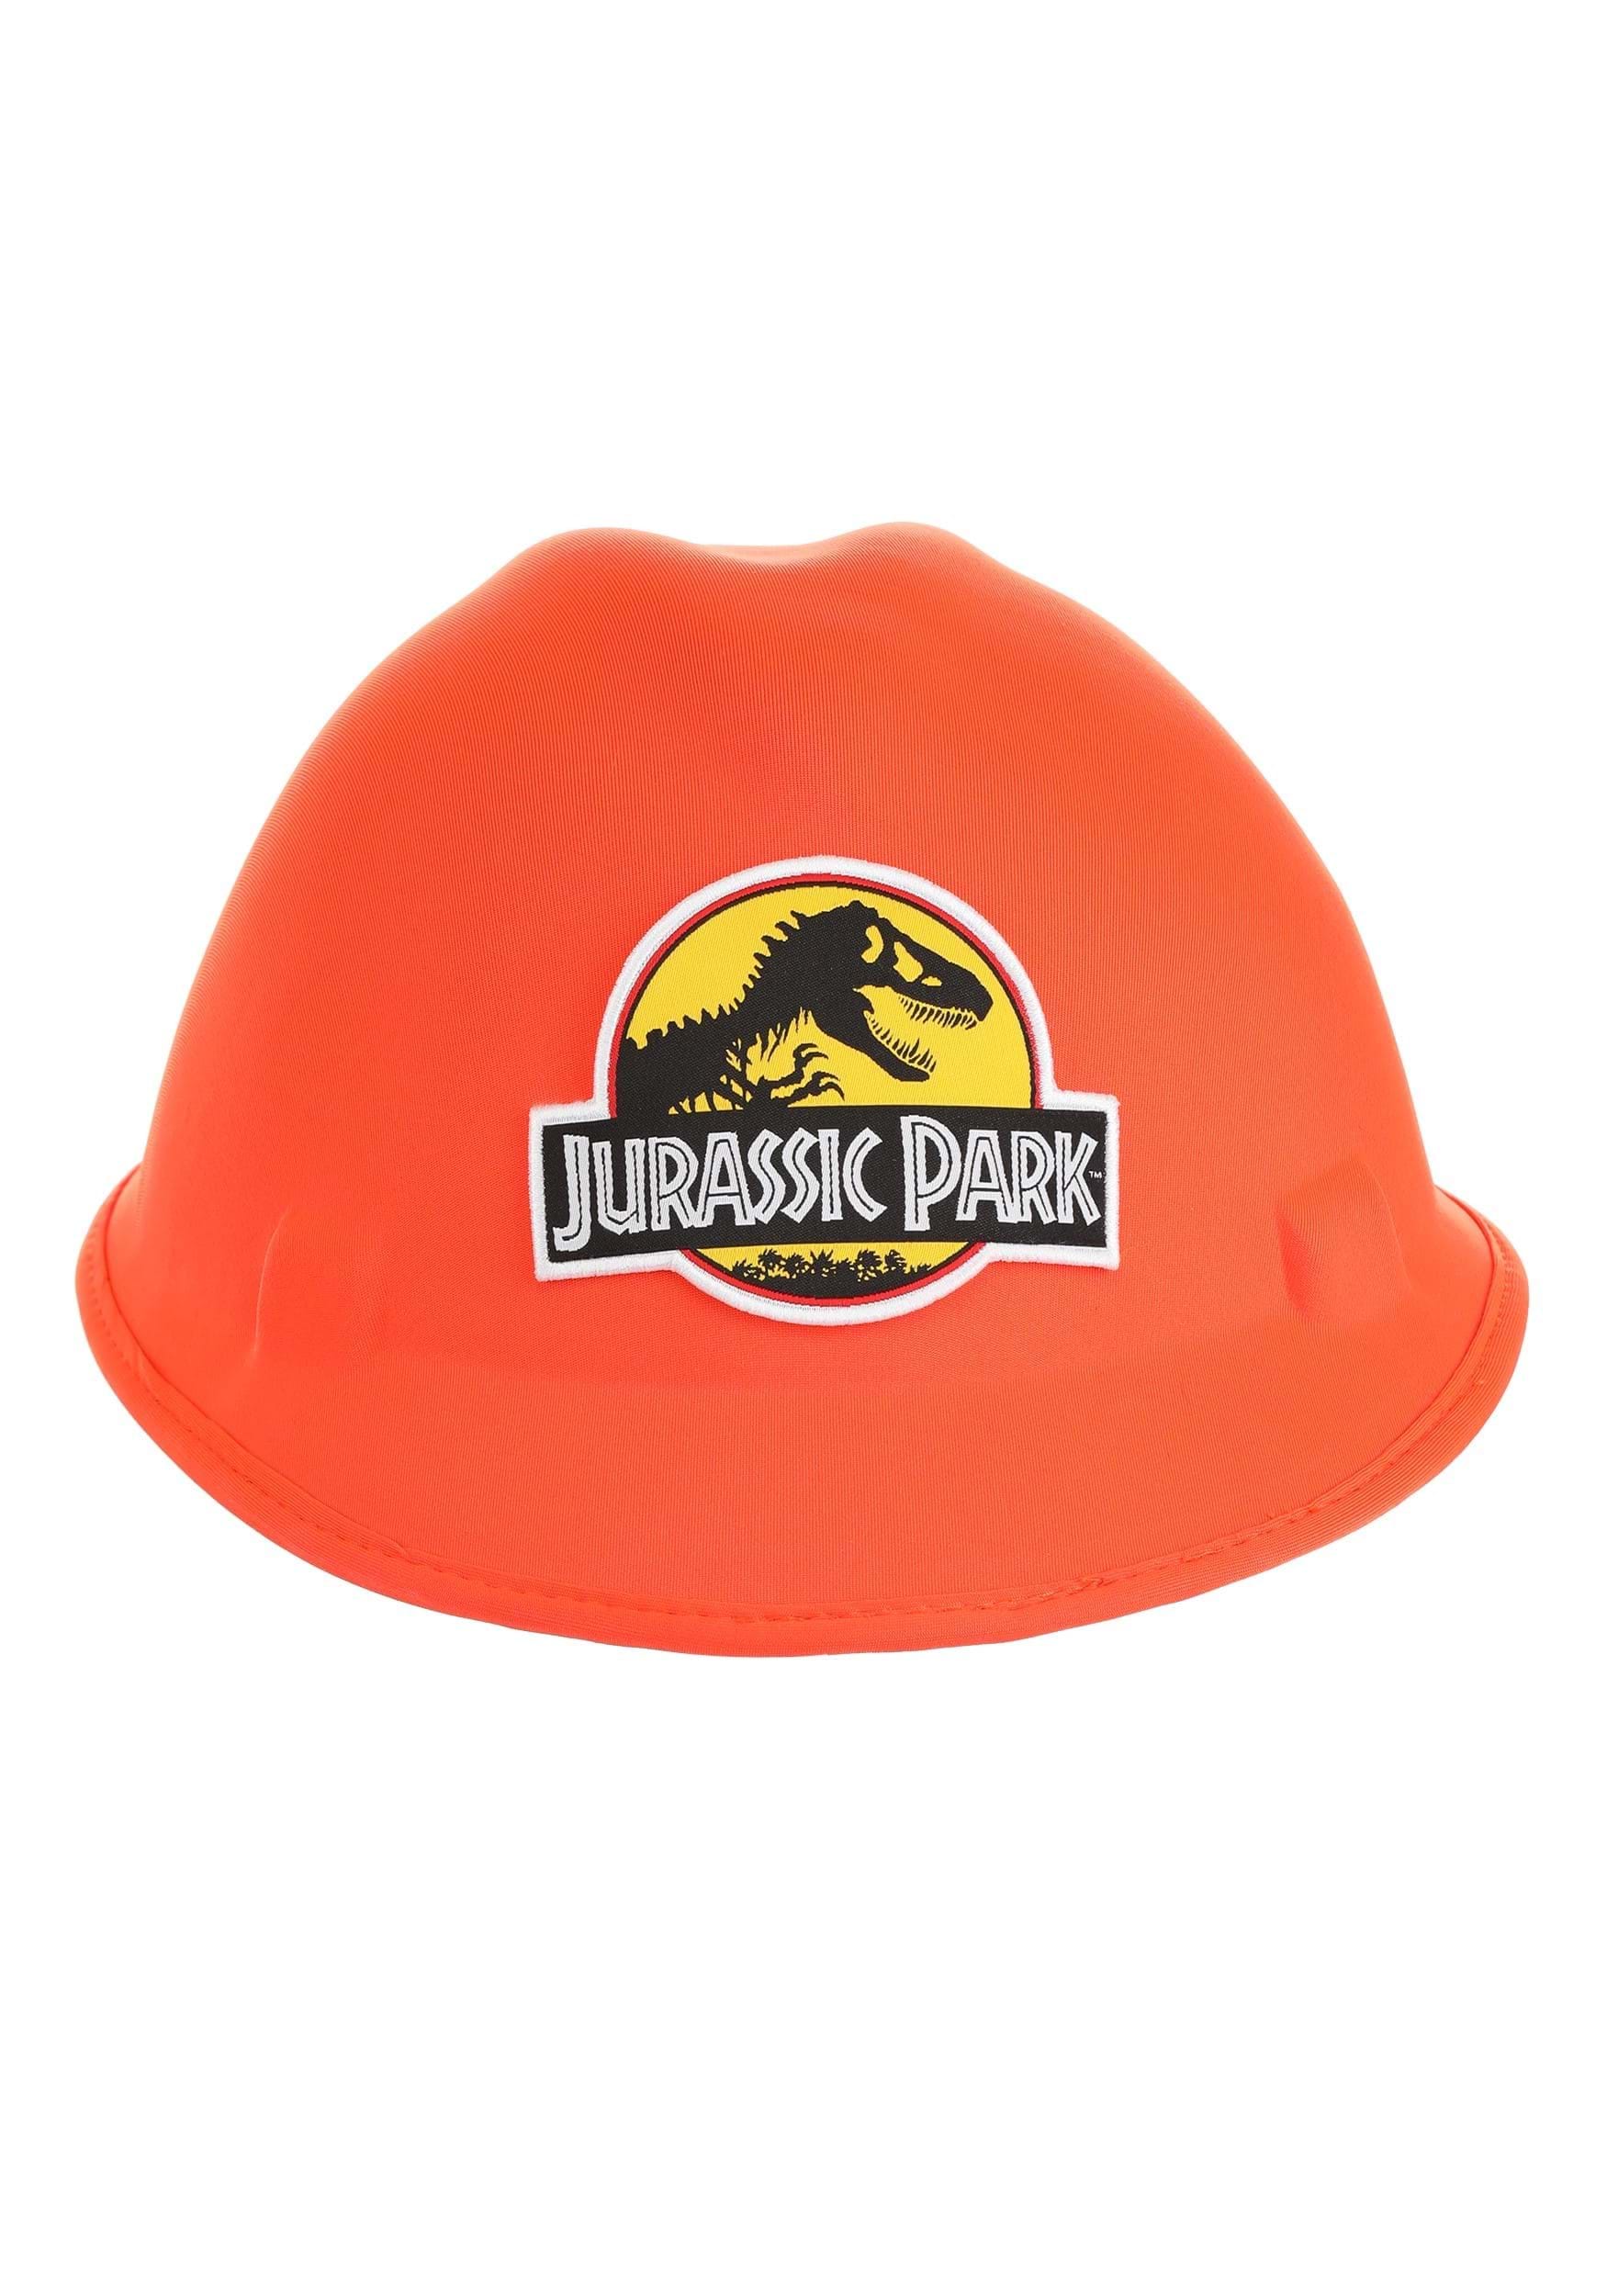 Jurassic Park Worker Adult Costume Hard Hat